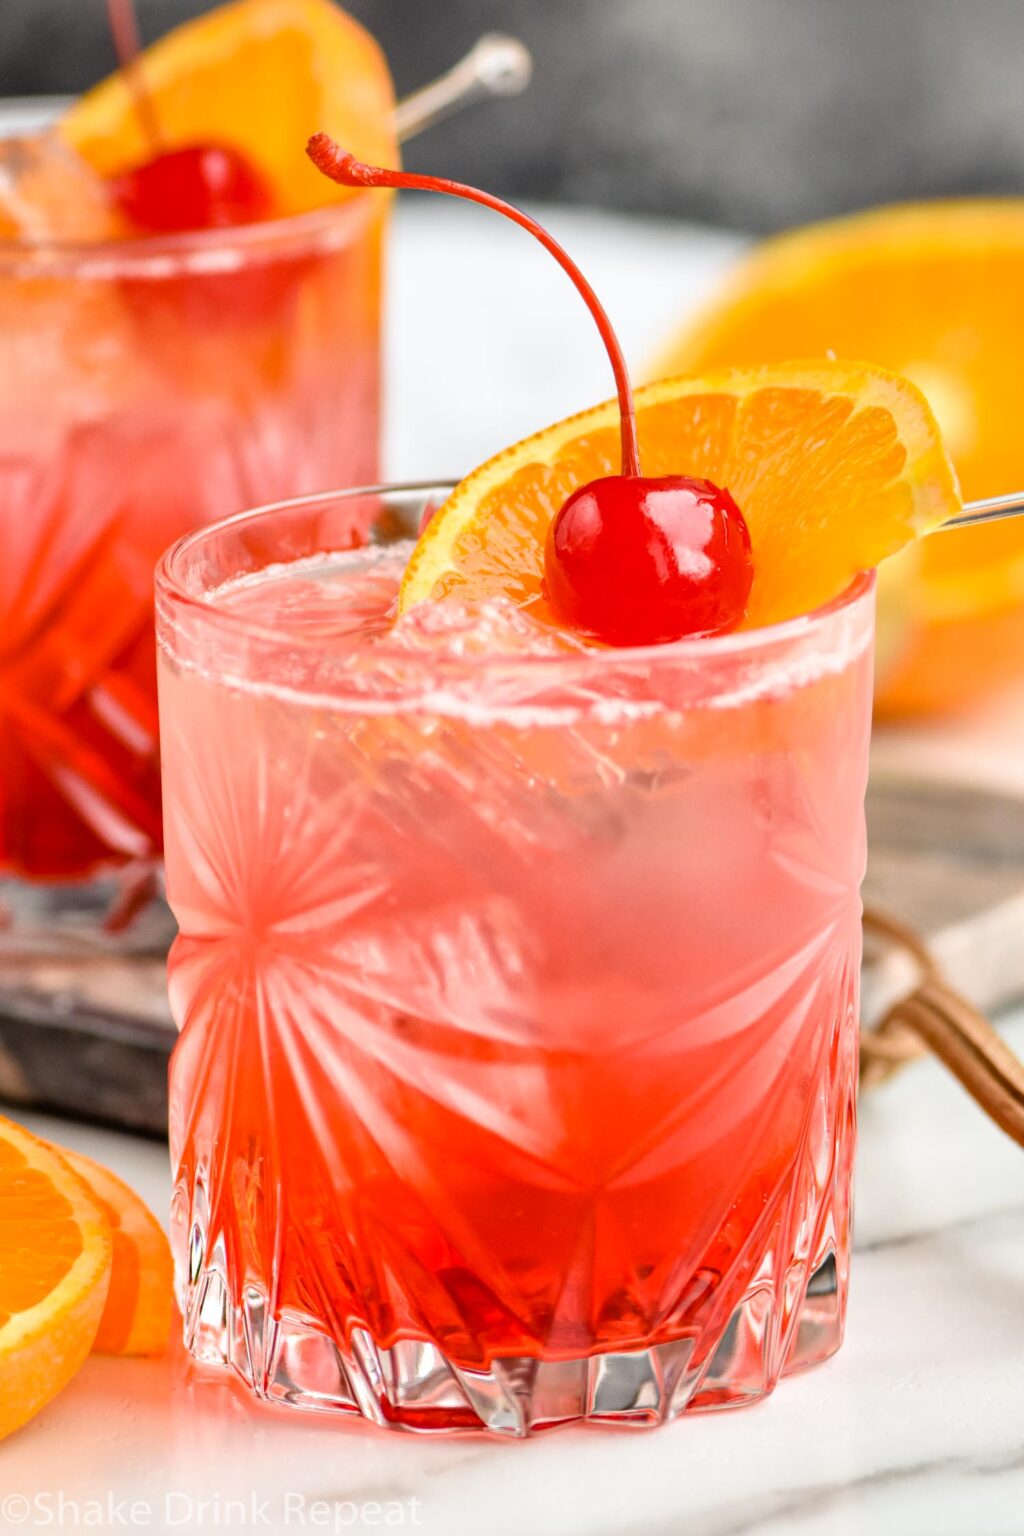 Cherry Vodka Sour - Shake Drink Repeat